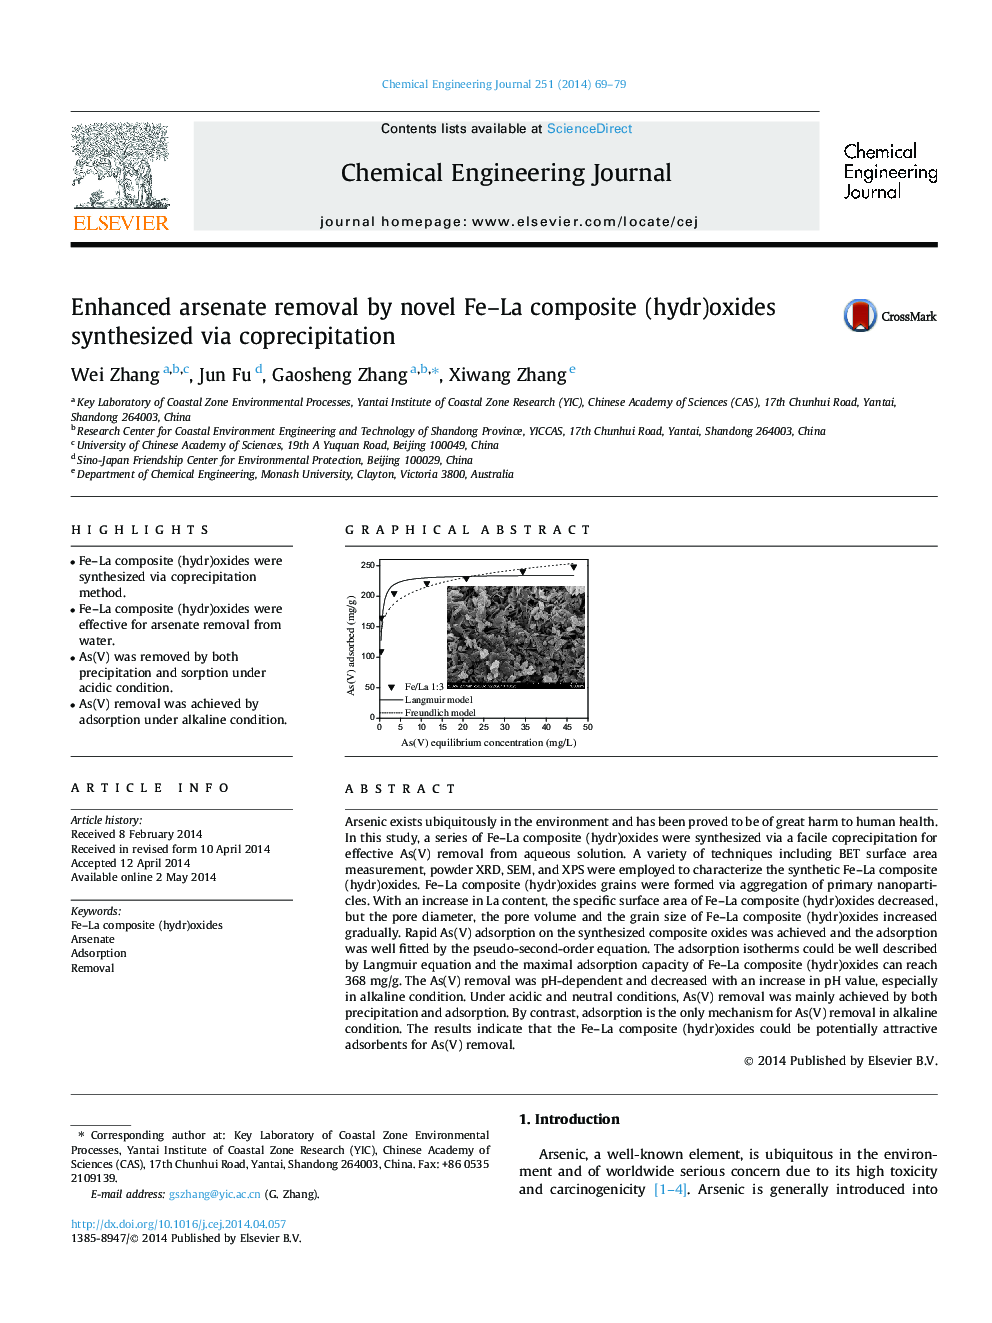 Enhanced arsenate removal by novel Fe-La composite (hydr)oxides synthesized via coprecipitation